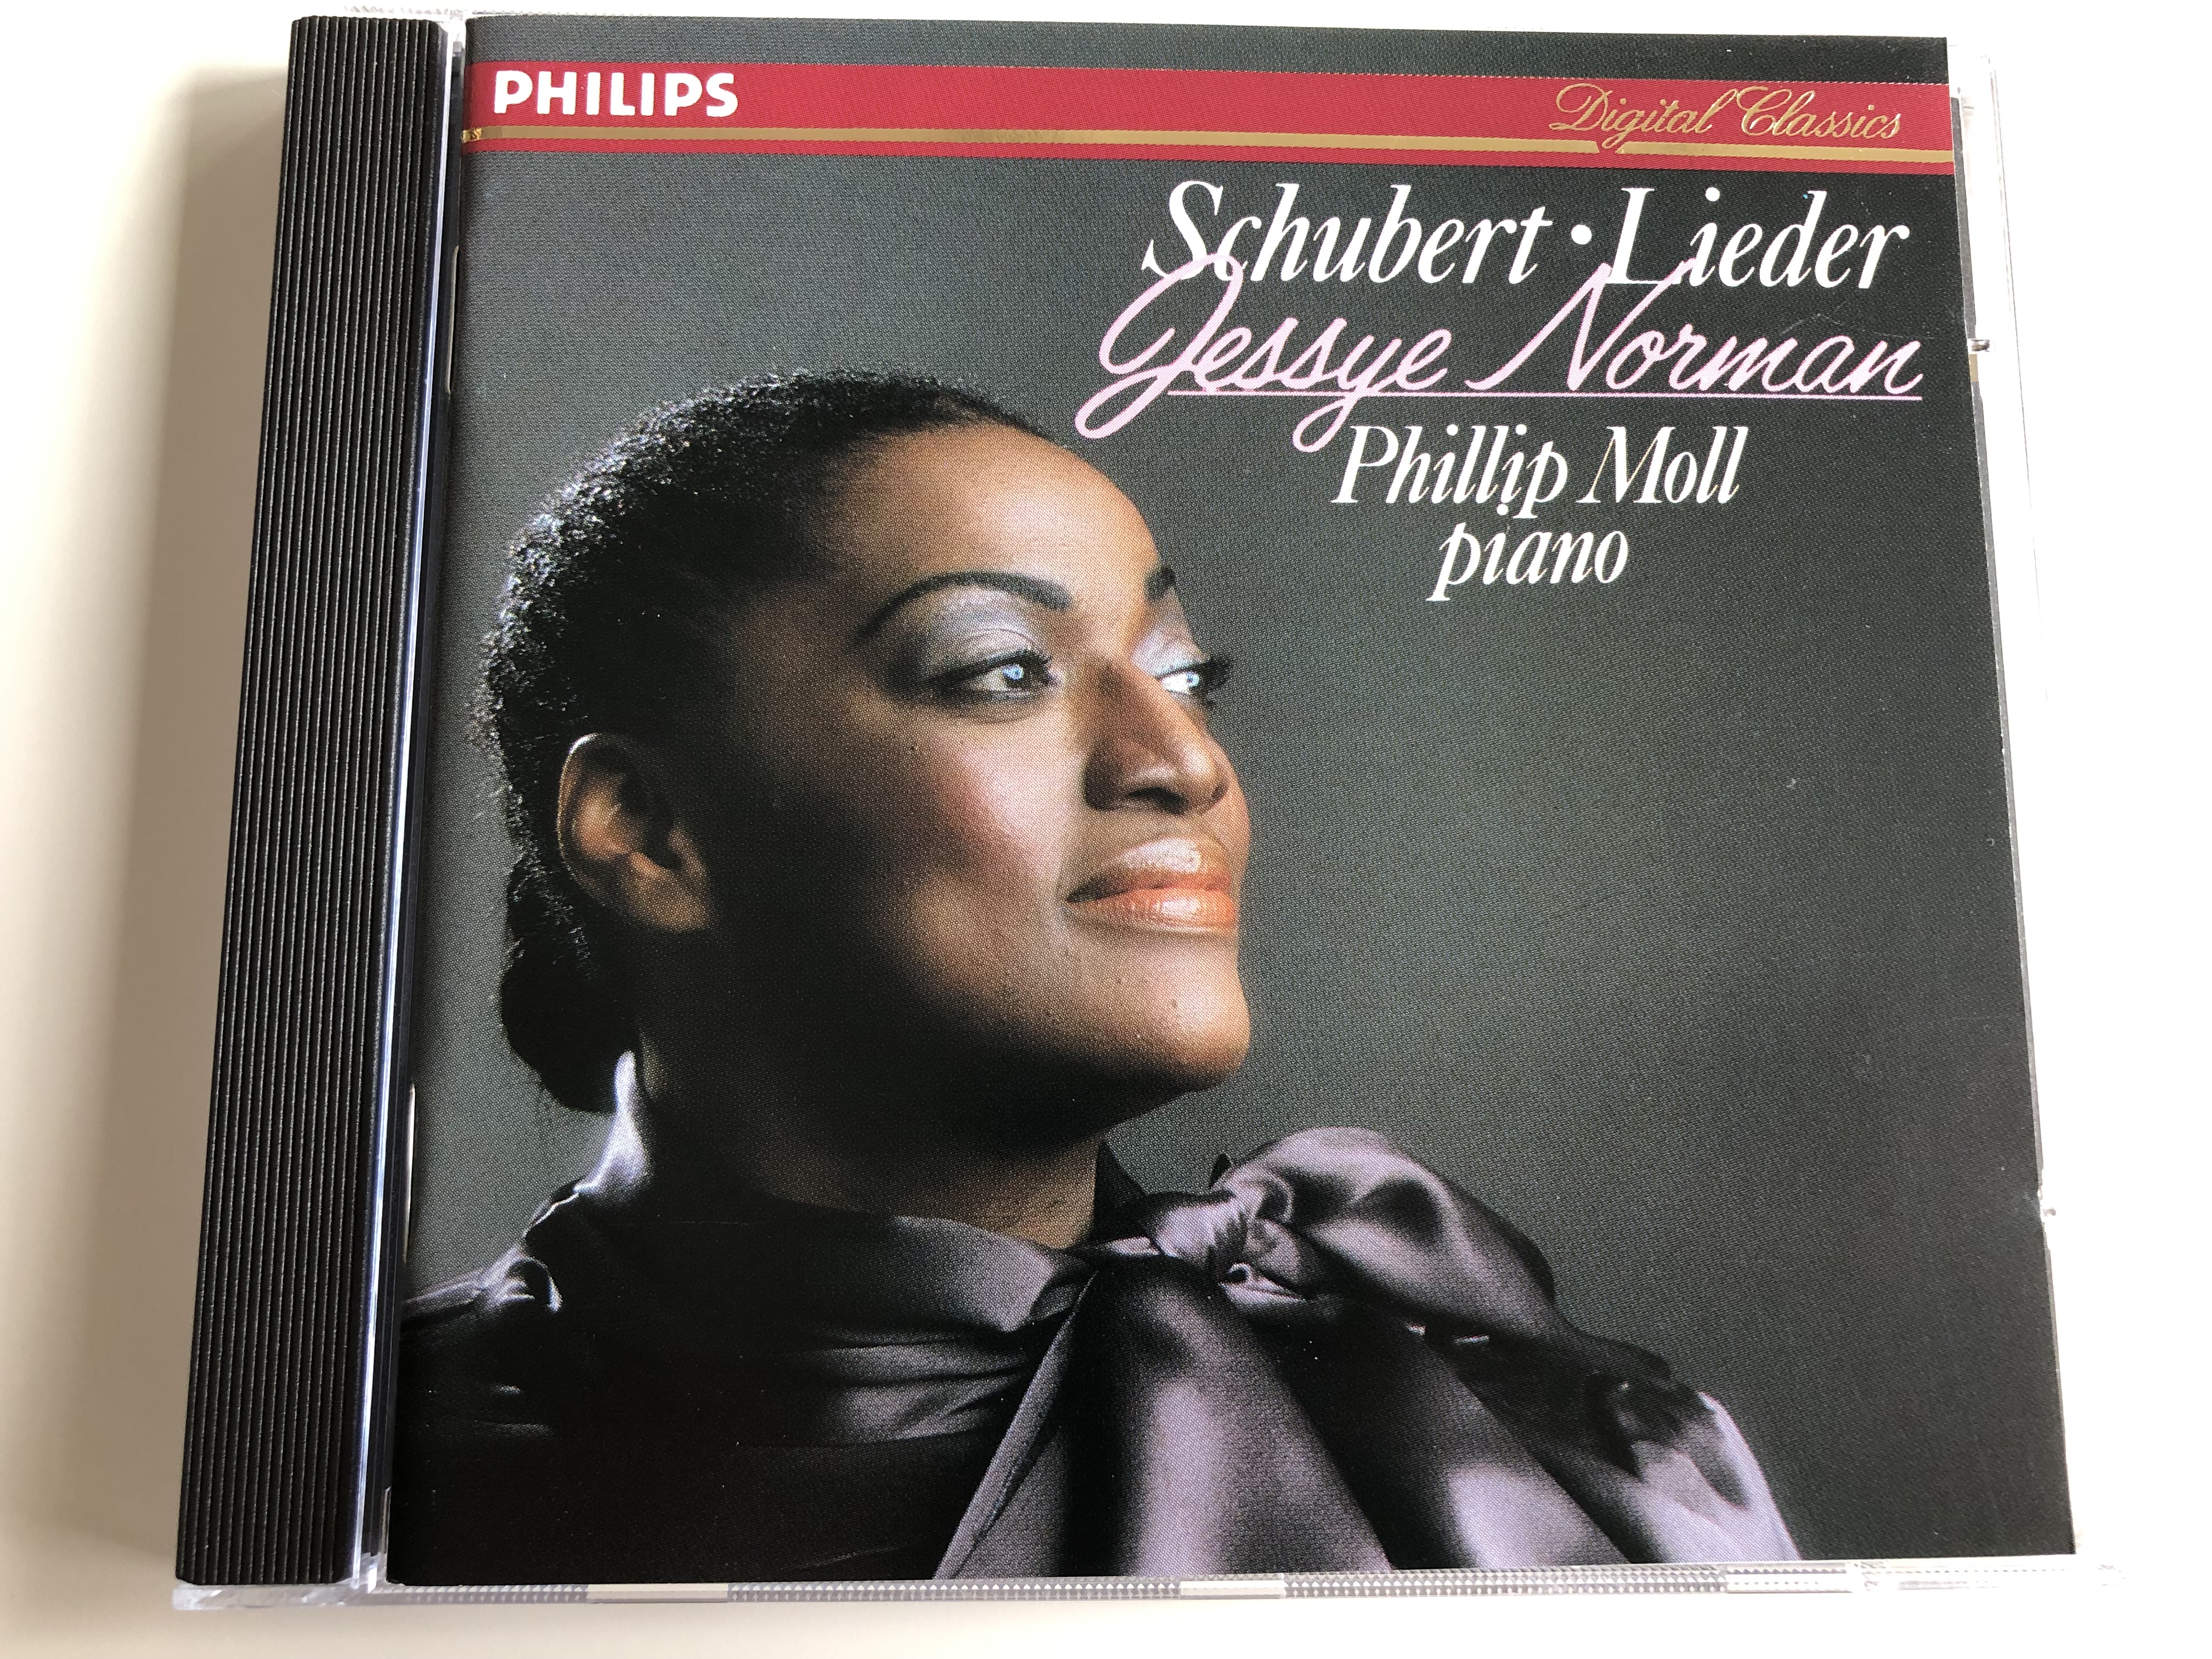 schubert-lieder-jessye-norman-phillip-moll-piano-philips-audio-cd-1985-412-623-2-1-.jpg